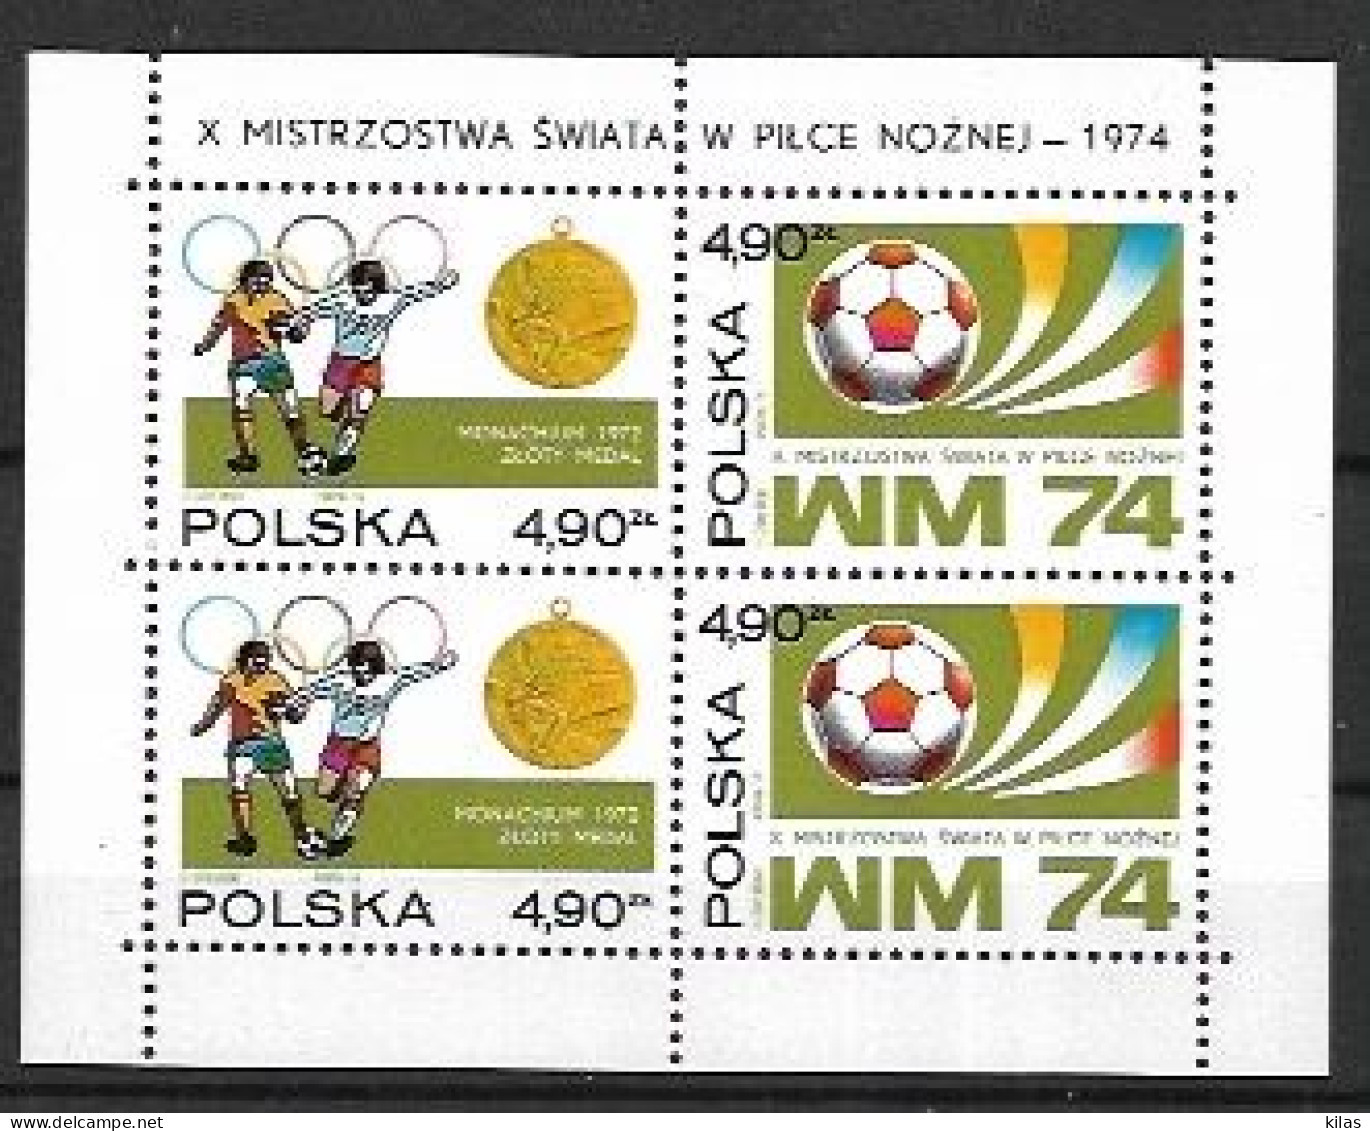 POLAND 1974 World Cup 74 Soccer MNH - Blocks & Sheetlets & Panes